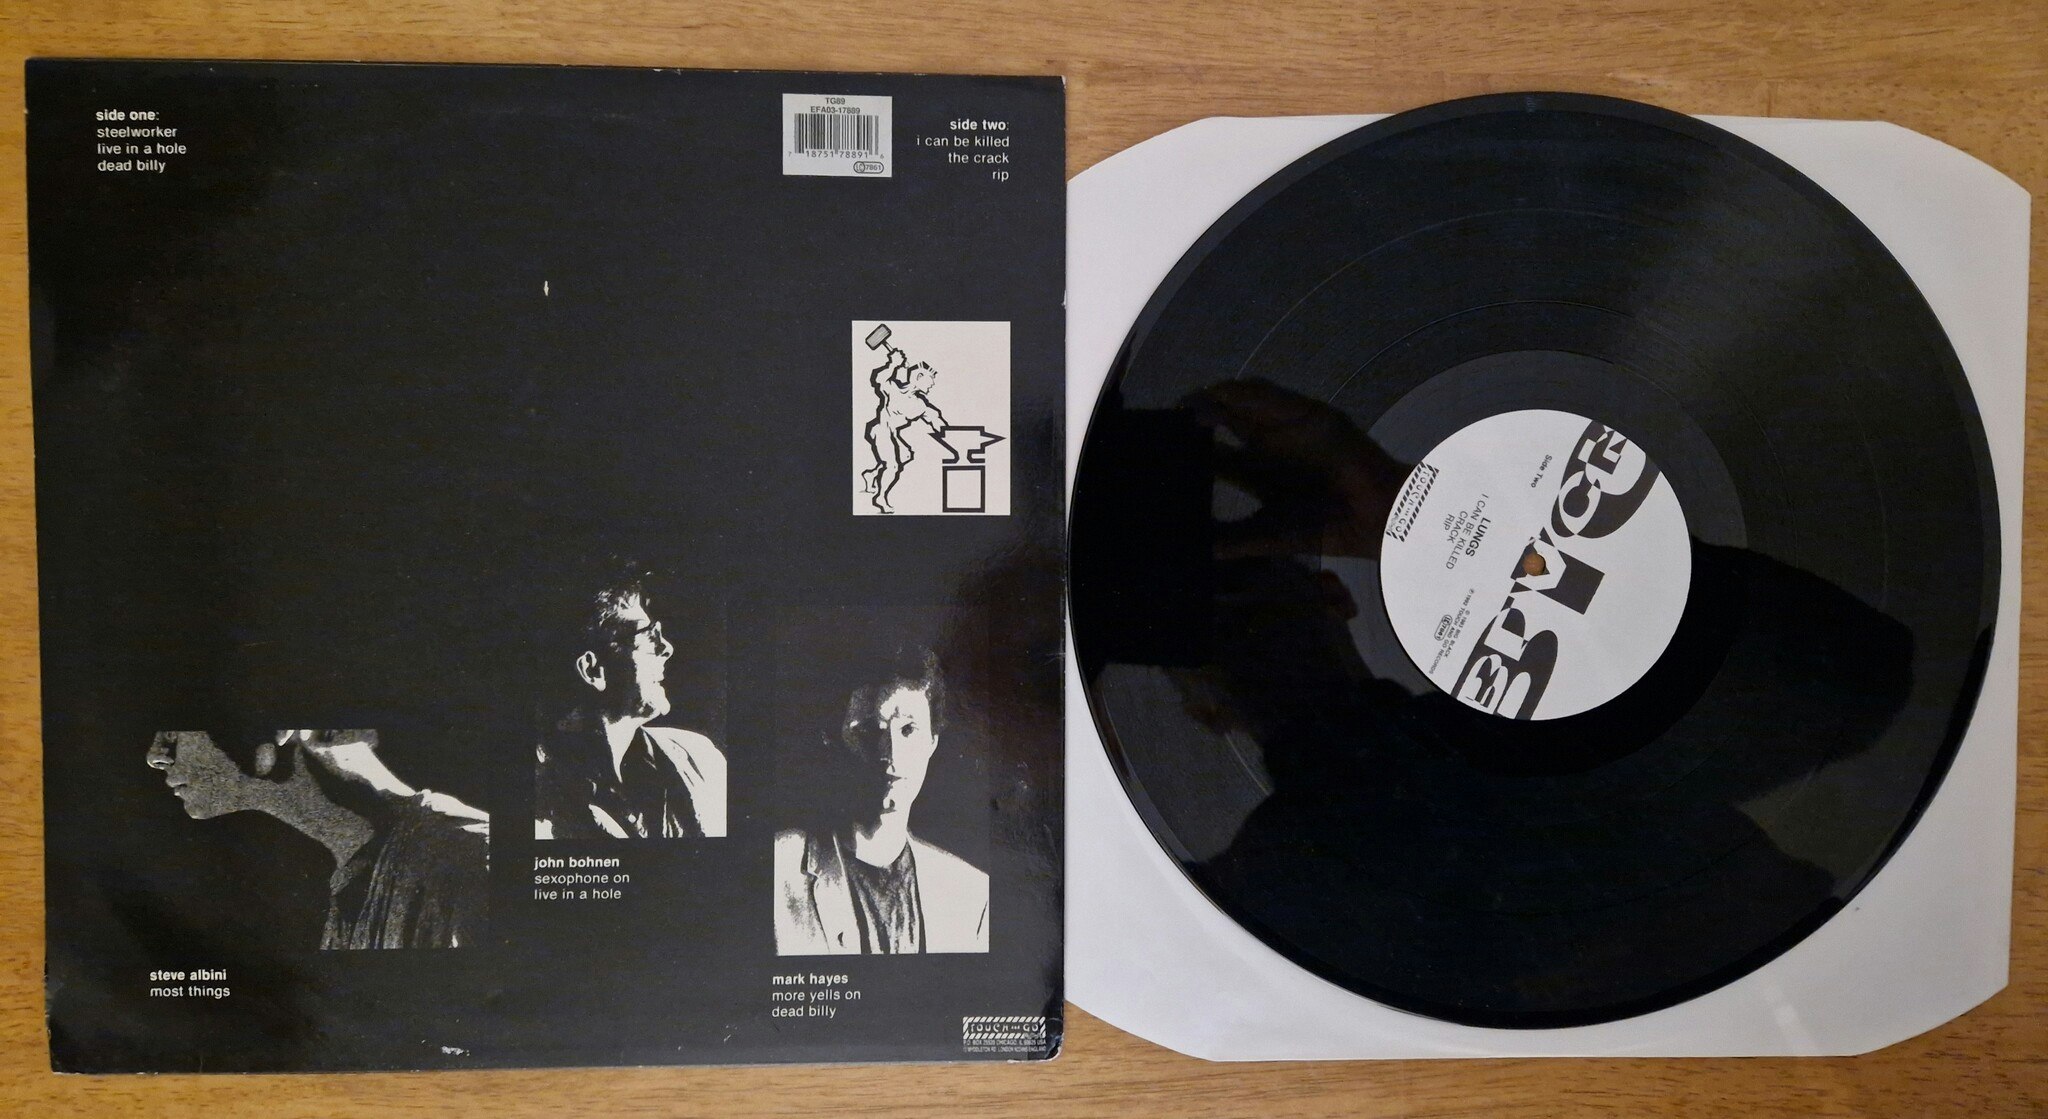 Big Black, Lungs. Vinyl S 12"